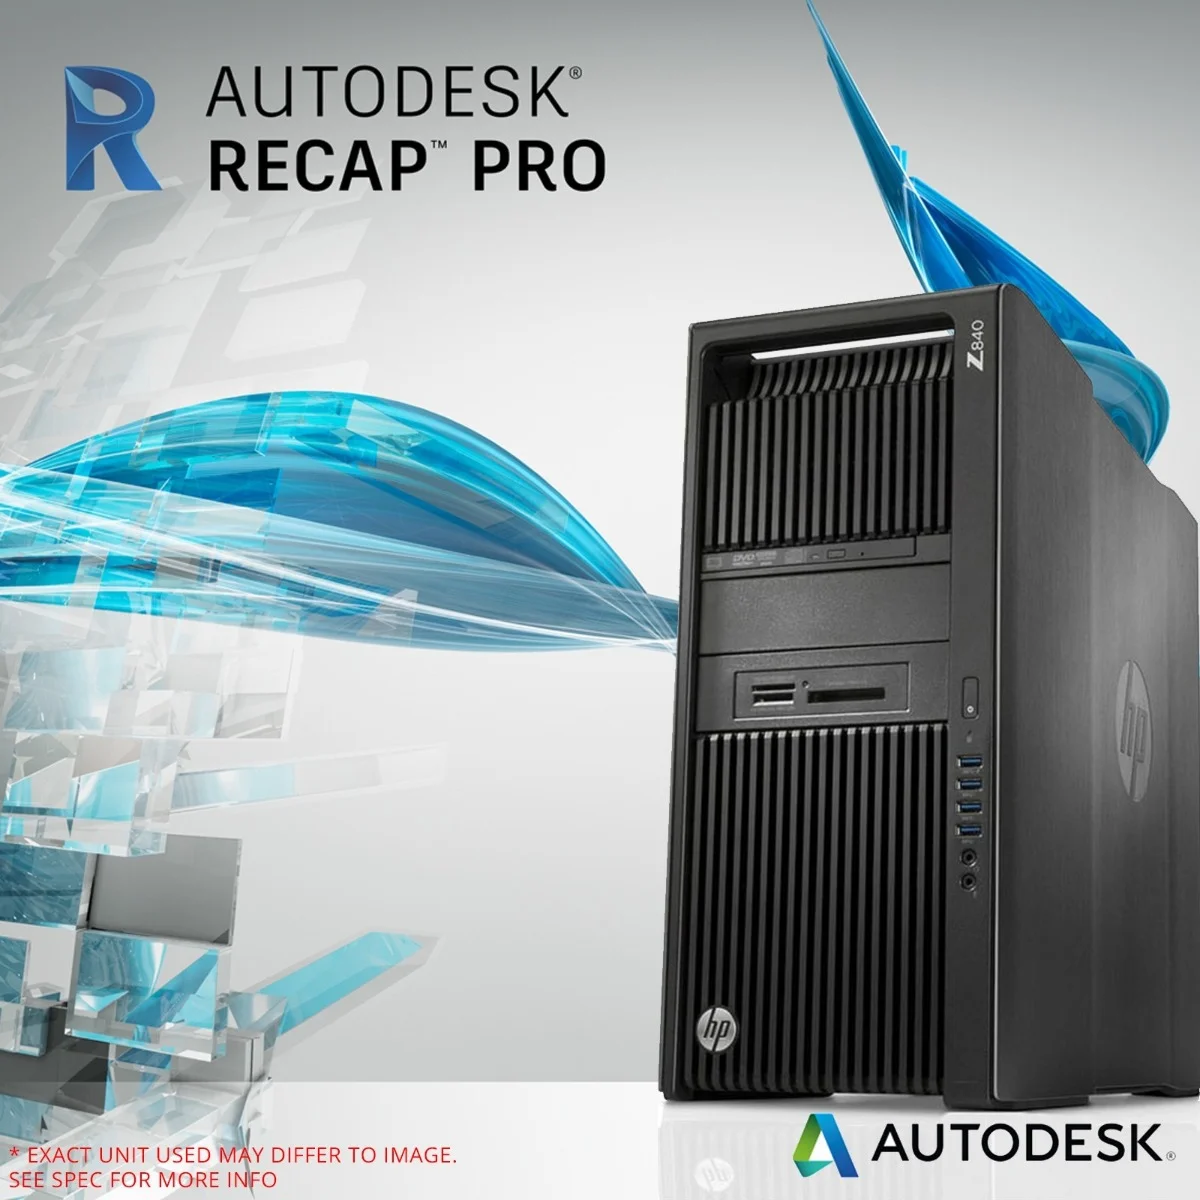 AutoDesk ReCap Pro Photo Pre-Configured Workstation